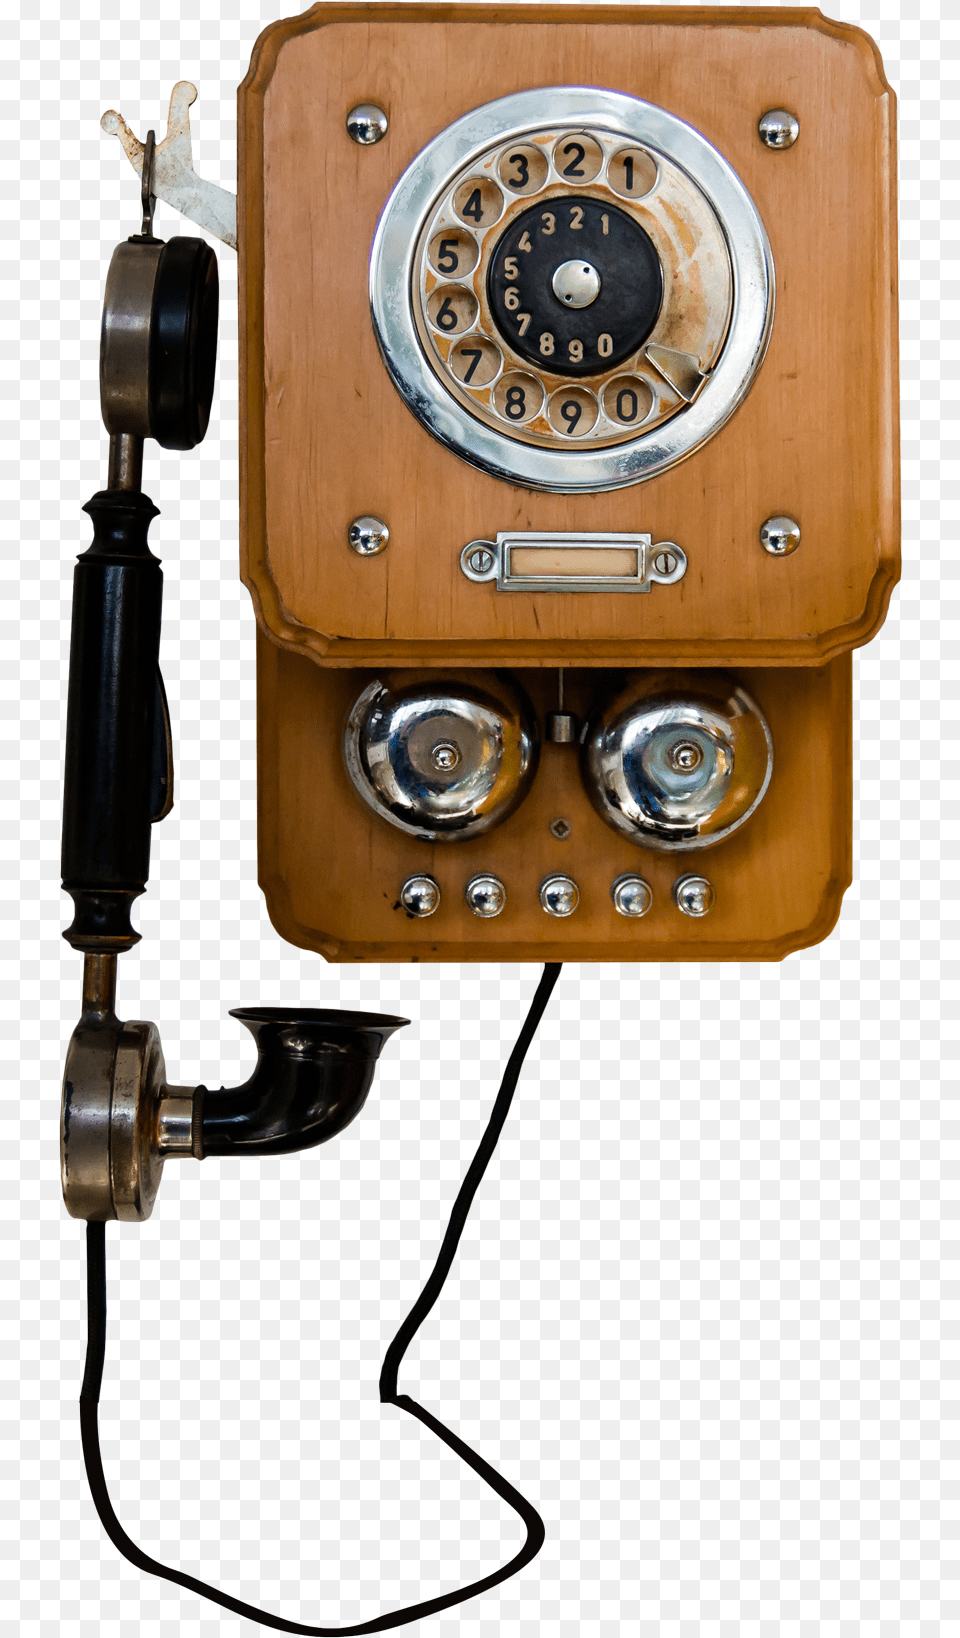 Vintage Telephone Retro Phone, Electronics, Dial Telephone, Gas Pump, Machine Png Image